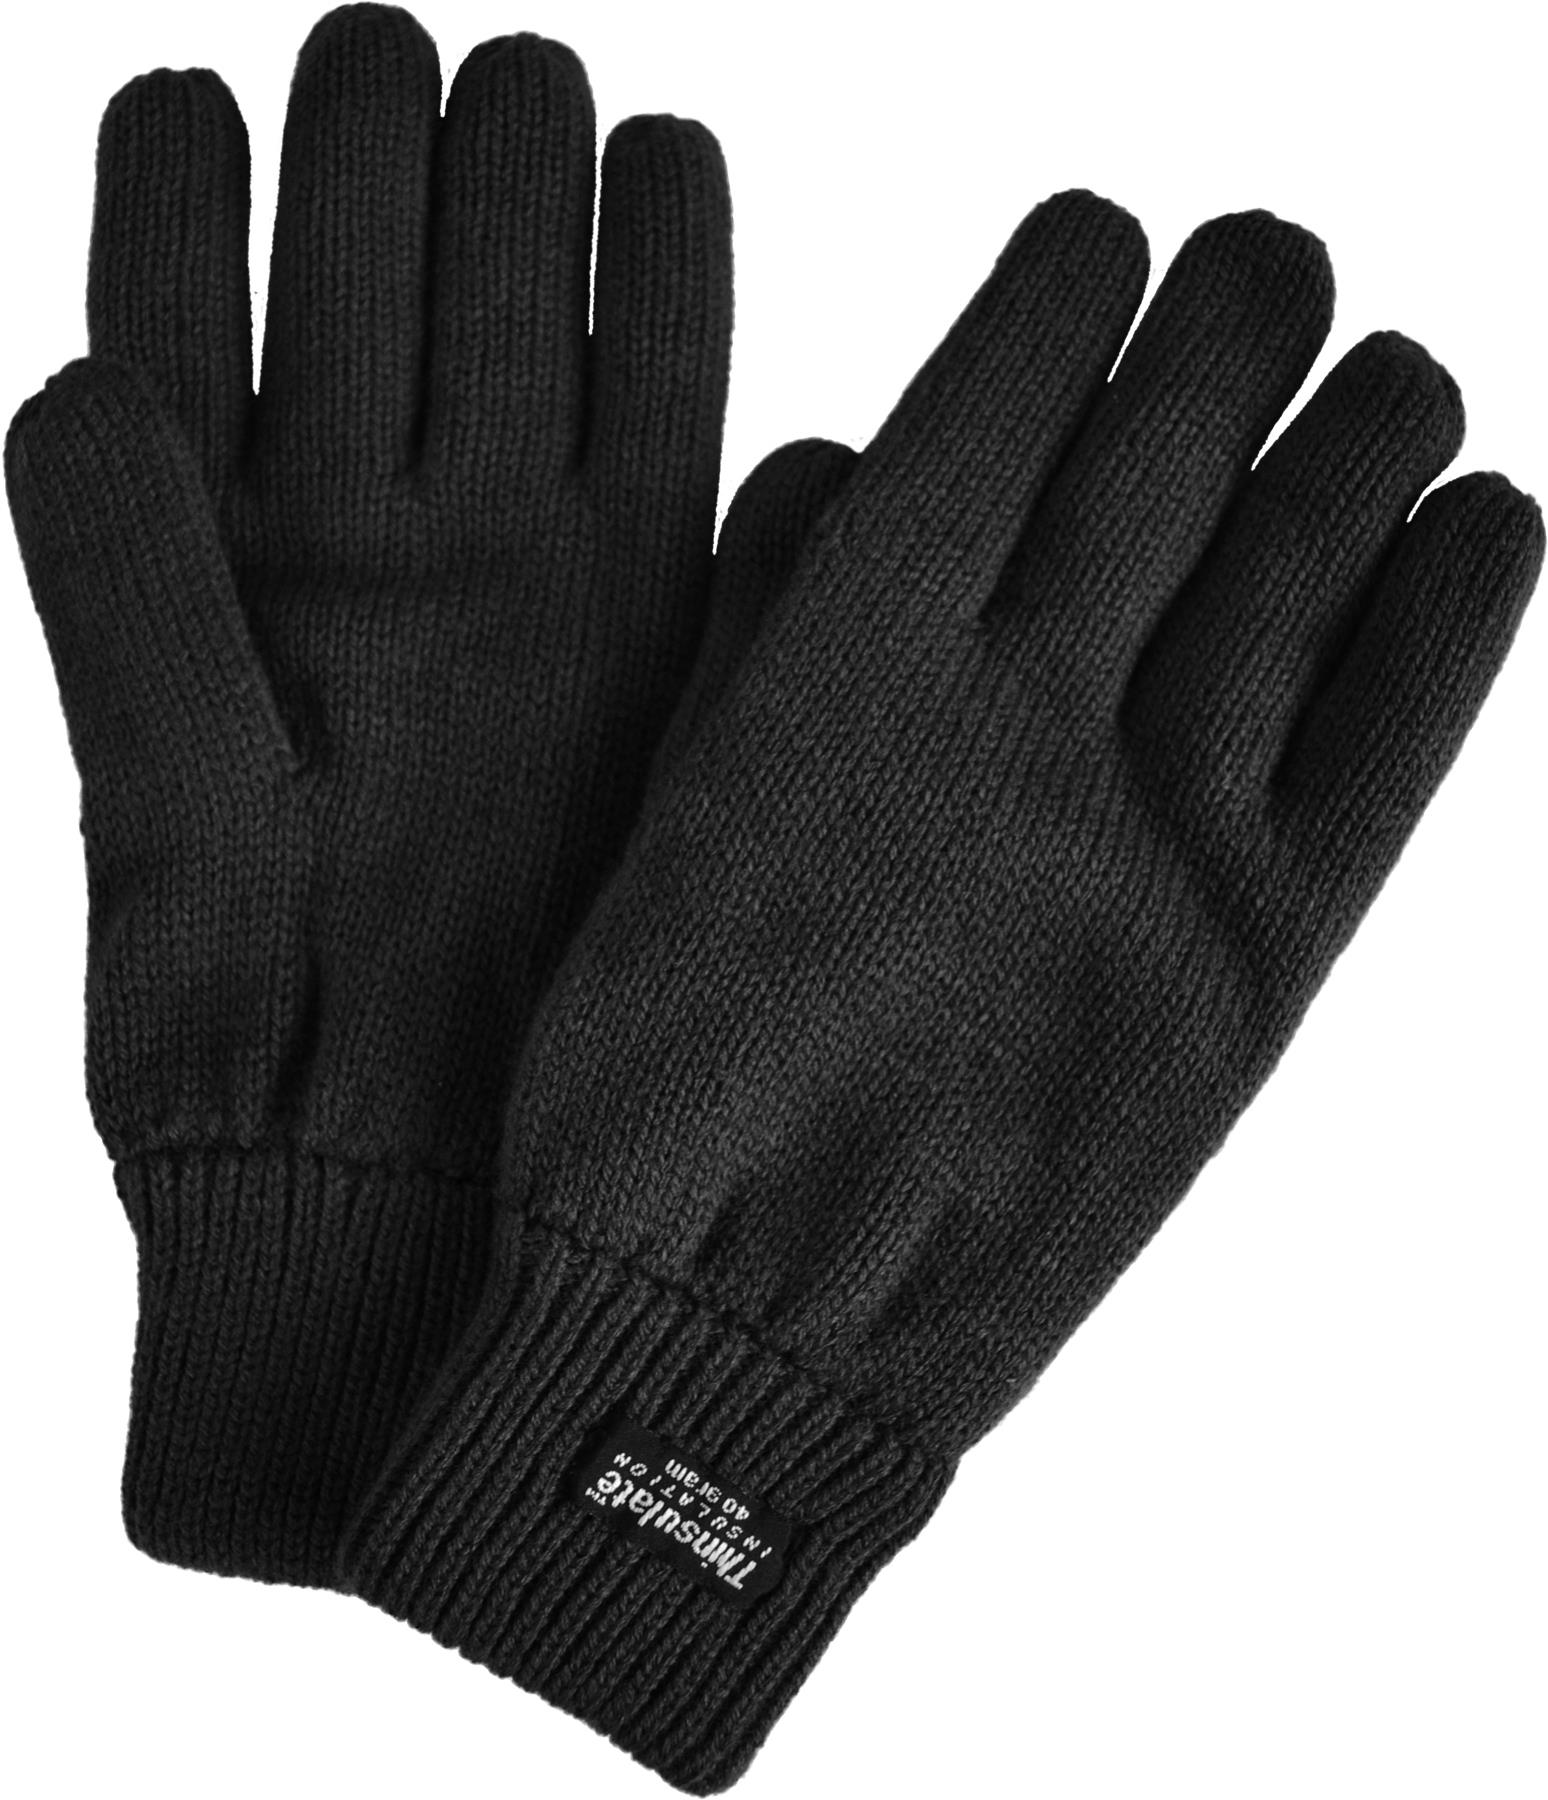 Strick Handschuhe Fingerhandschuhe Handschuh sehr warm 3M Thinsulate S-XXL NEU 